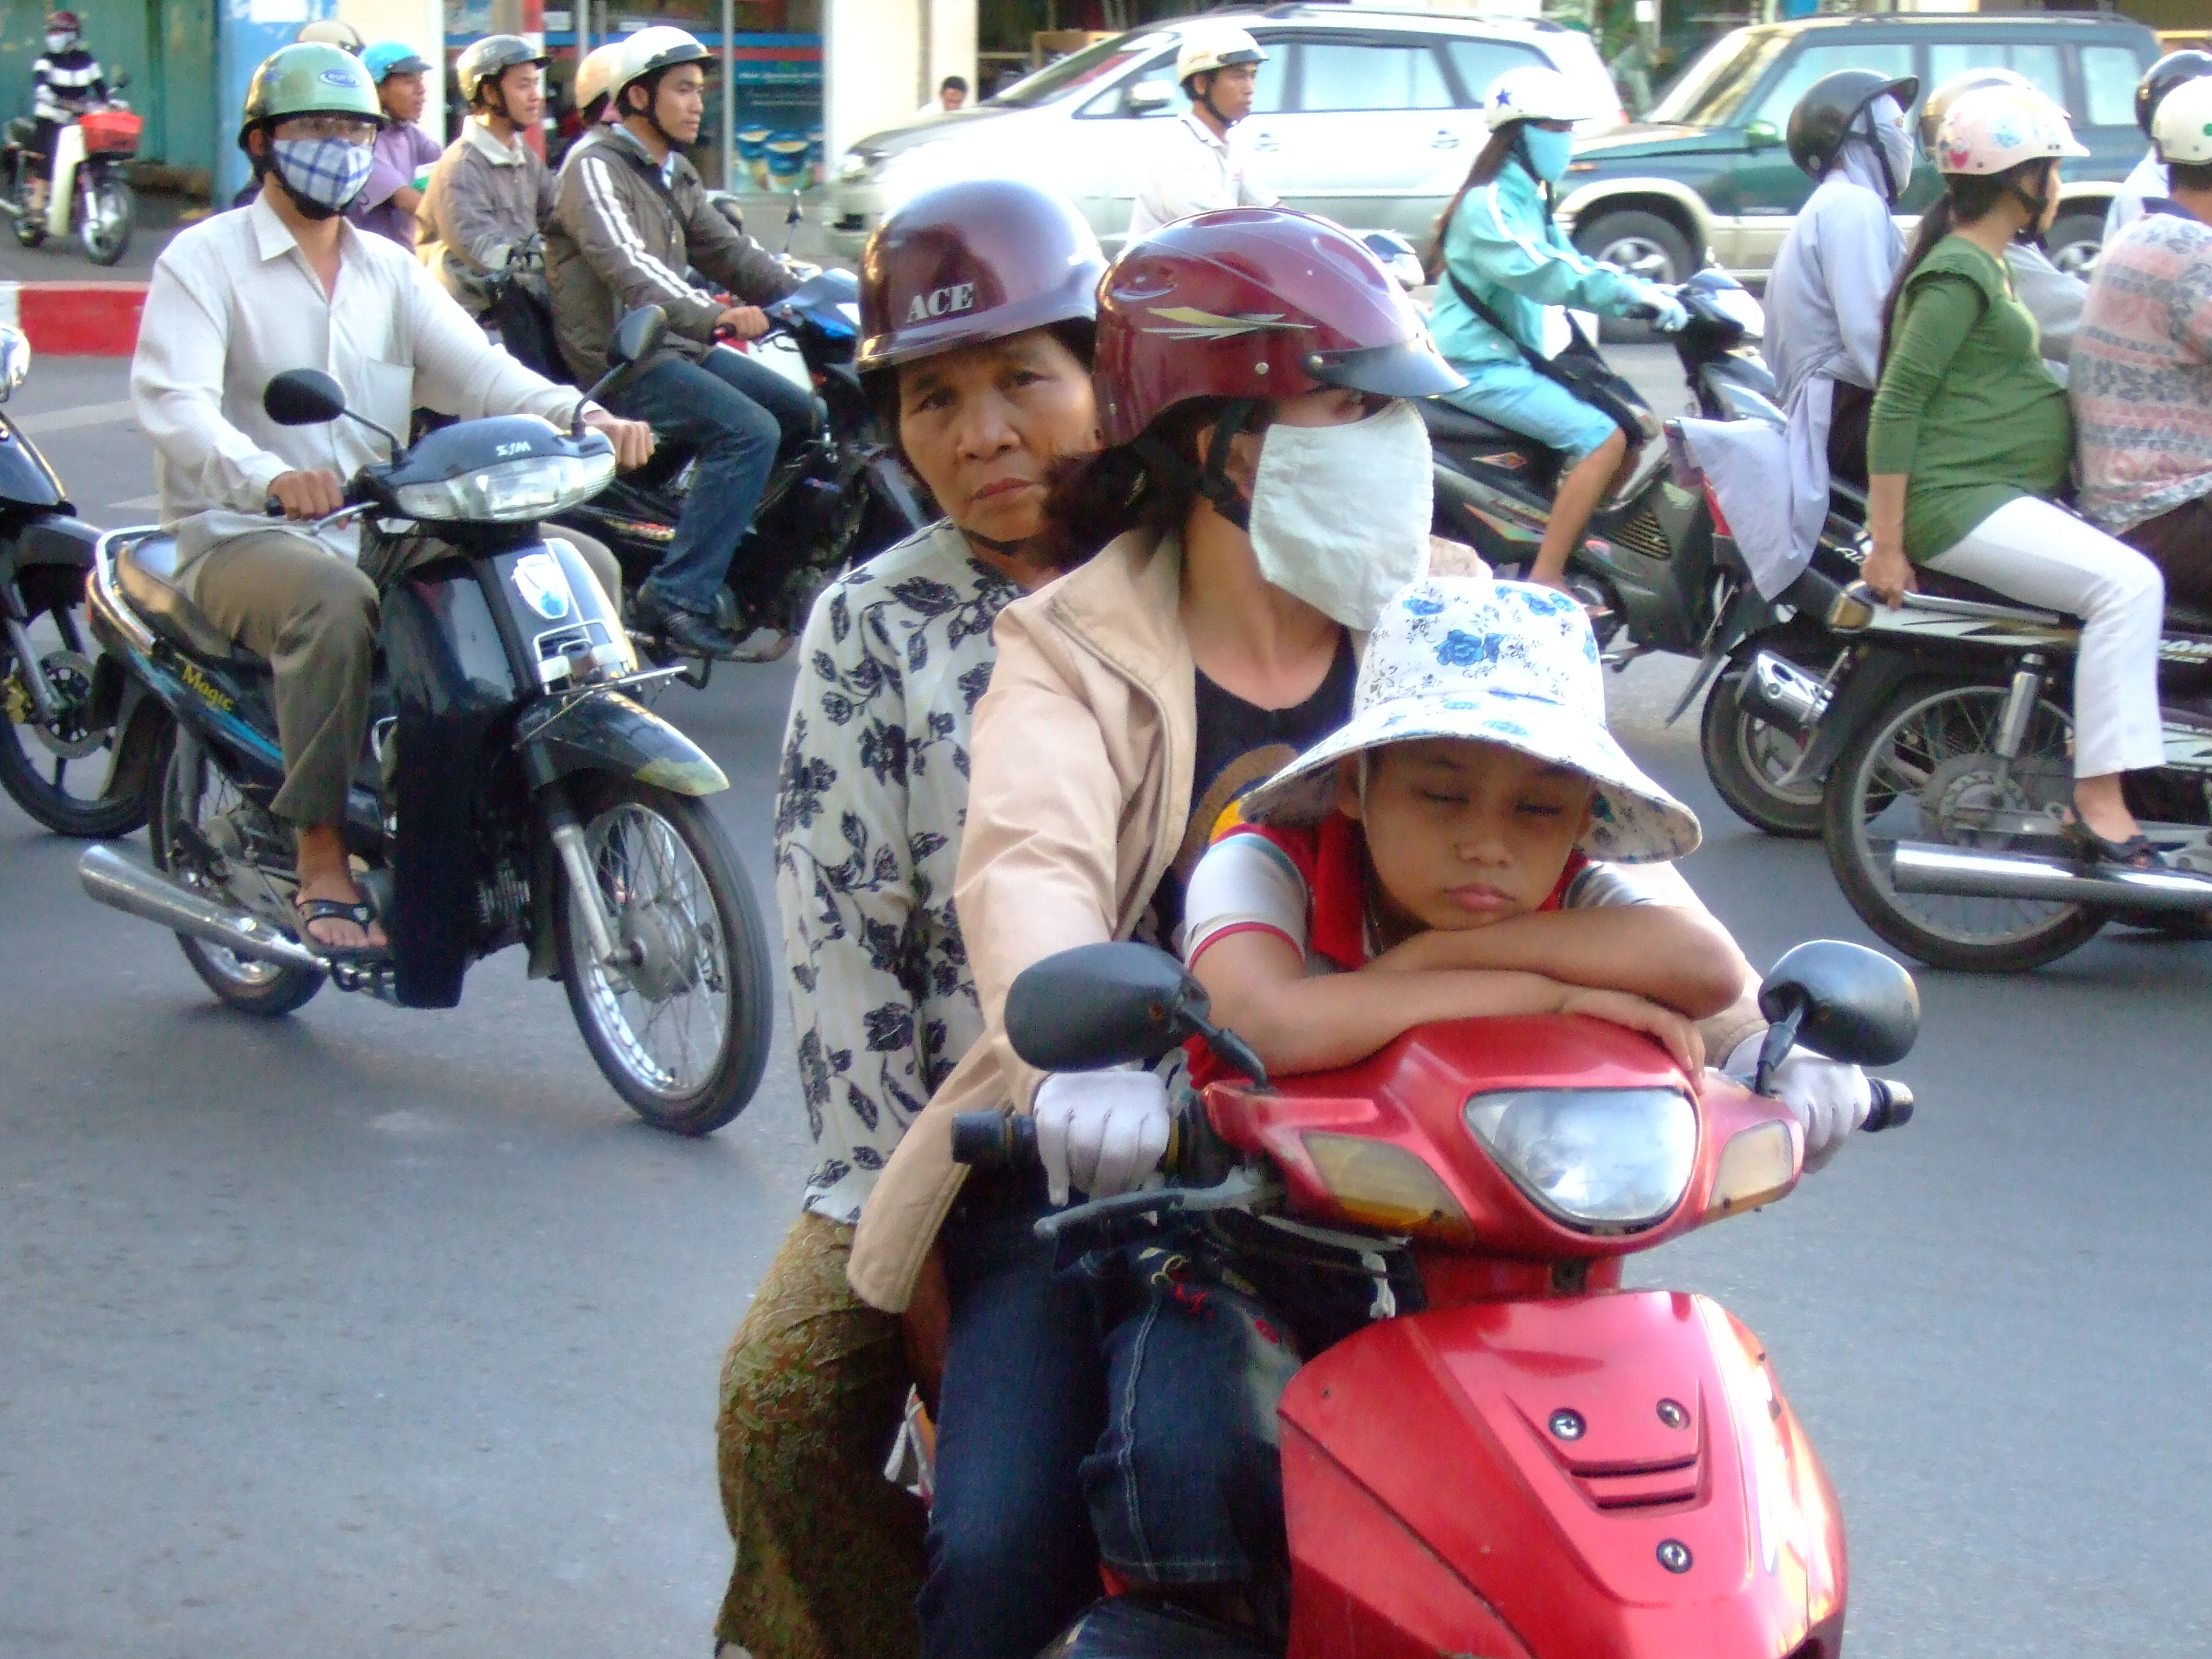 Vietnam Ho Chi Minh City scooters street scenes Feb 2009 24